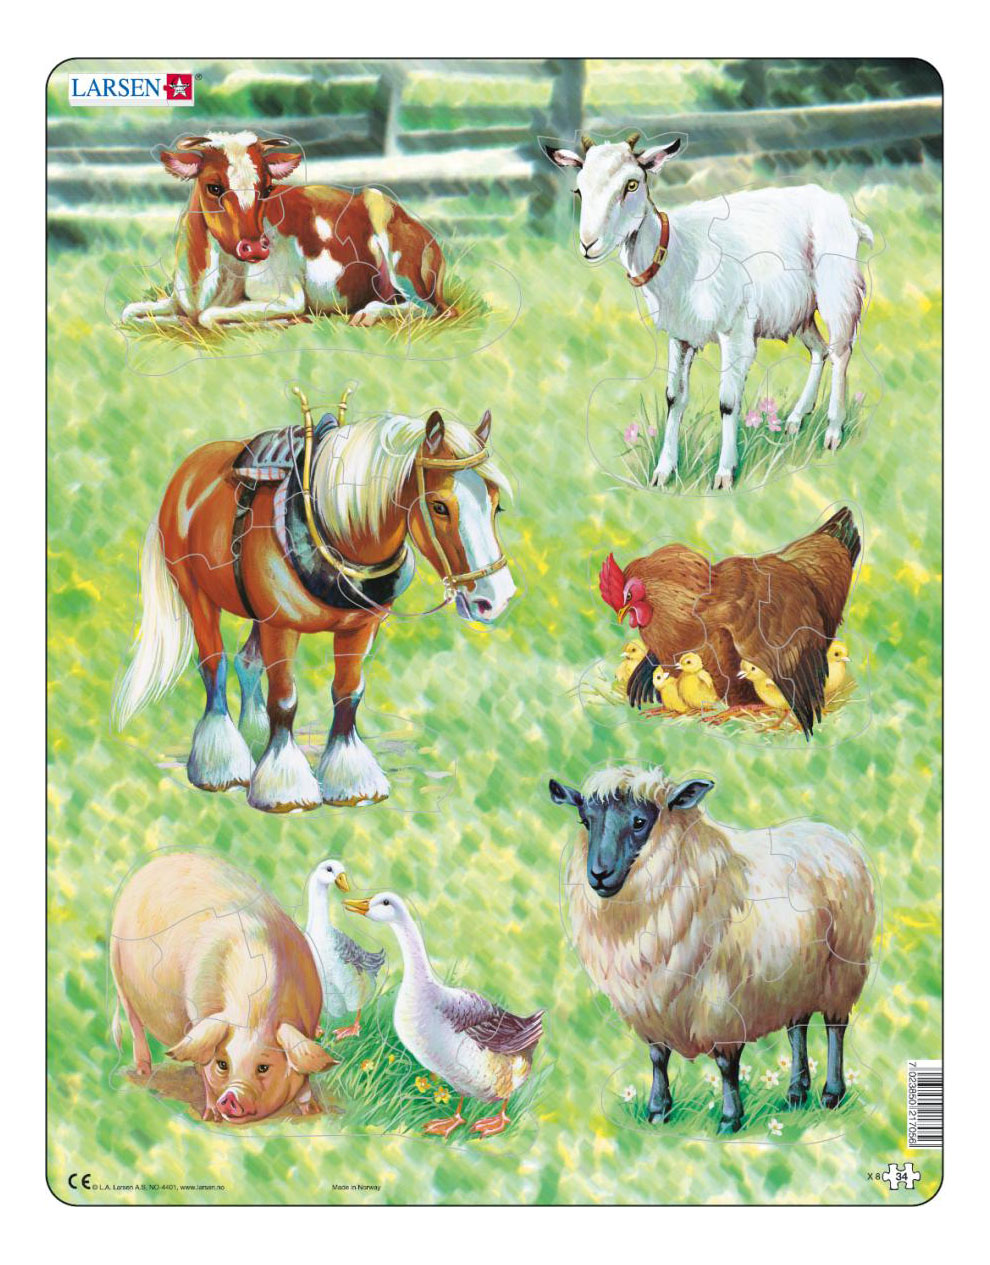 Larsen fh23 - животные фермы